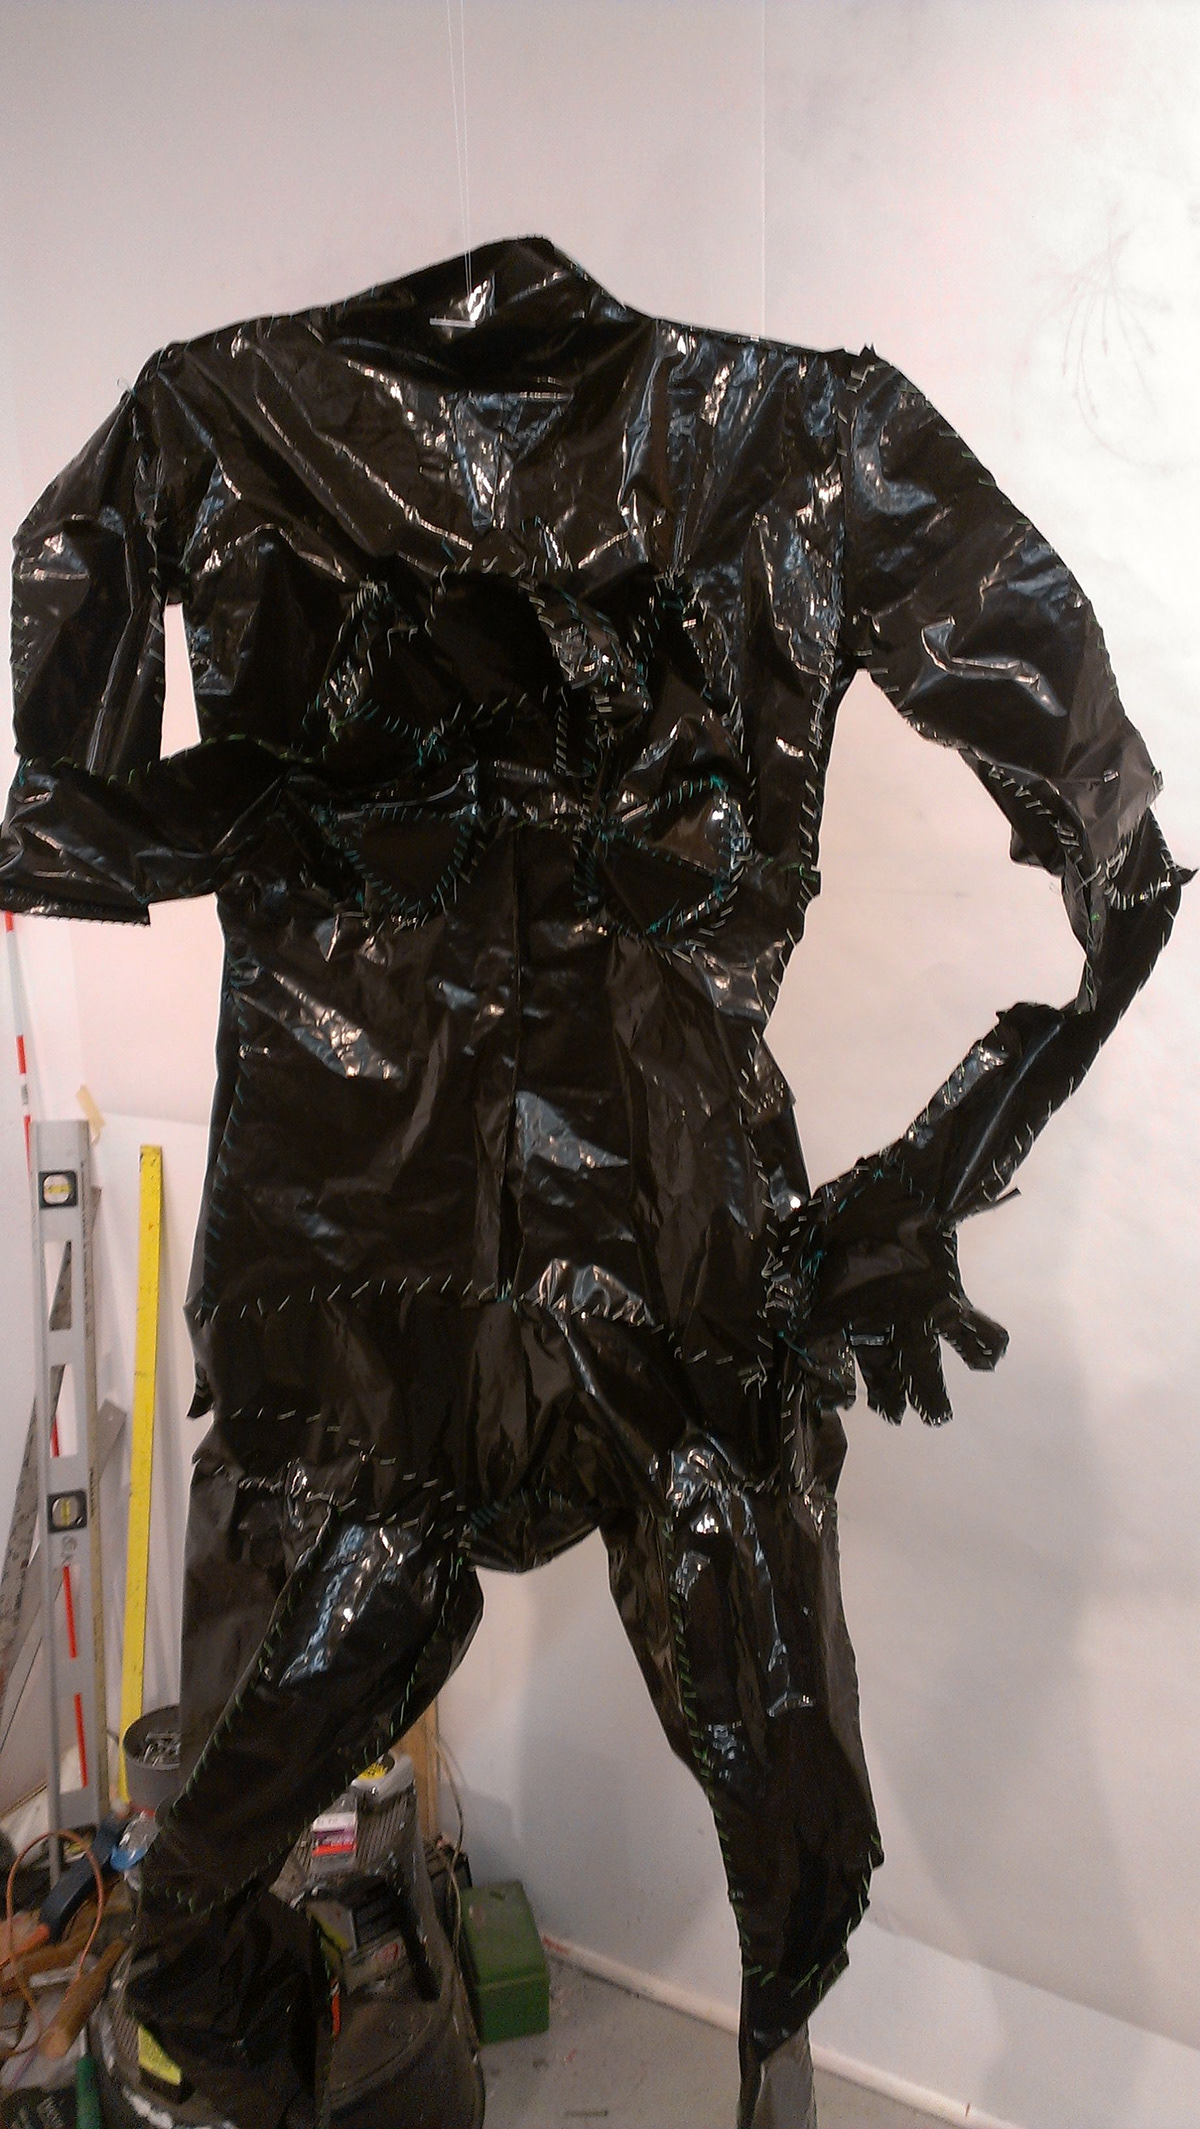 plastic recycling sculpture installation self-portrait fiber art eco drawings eco-art photograms plastic bags